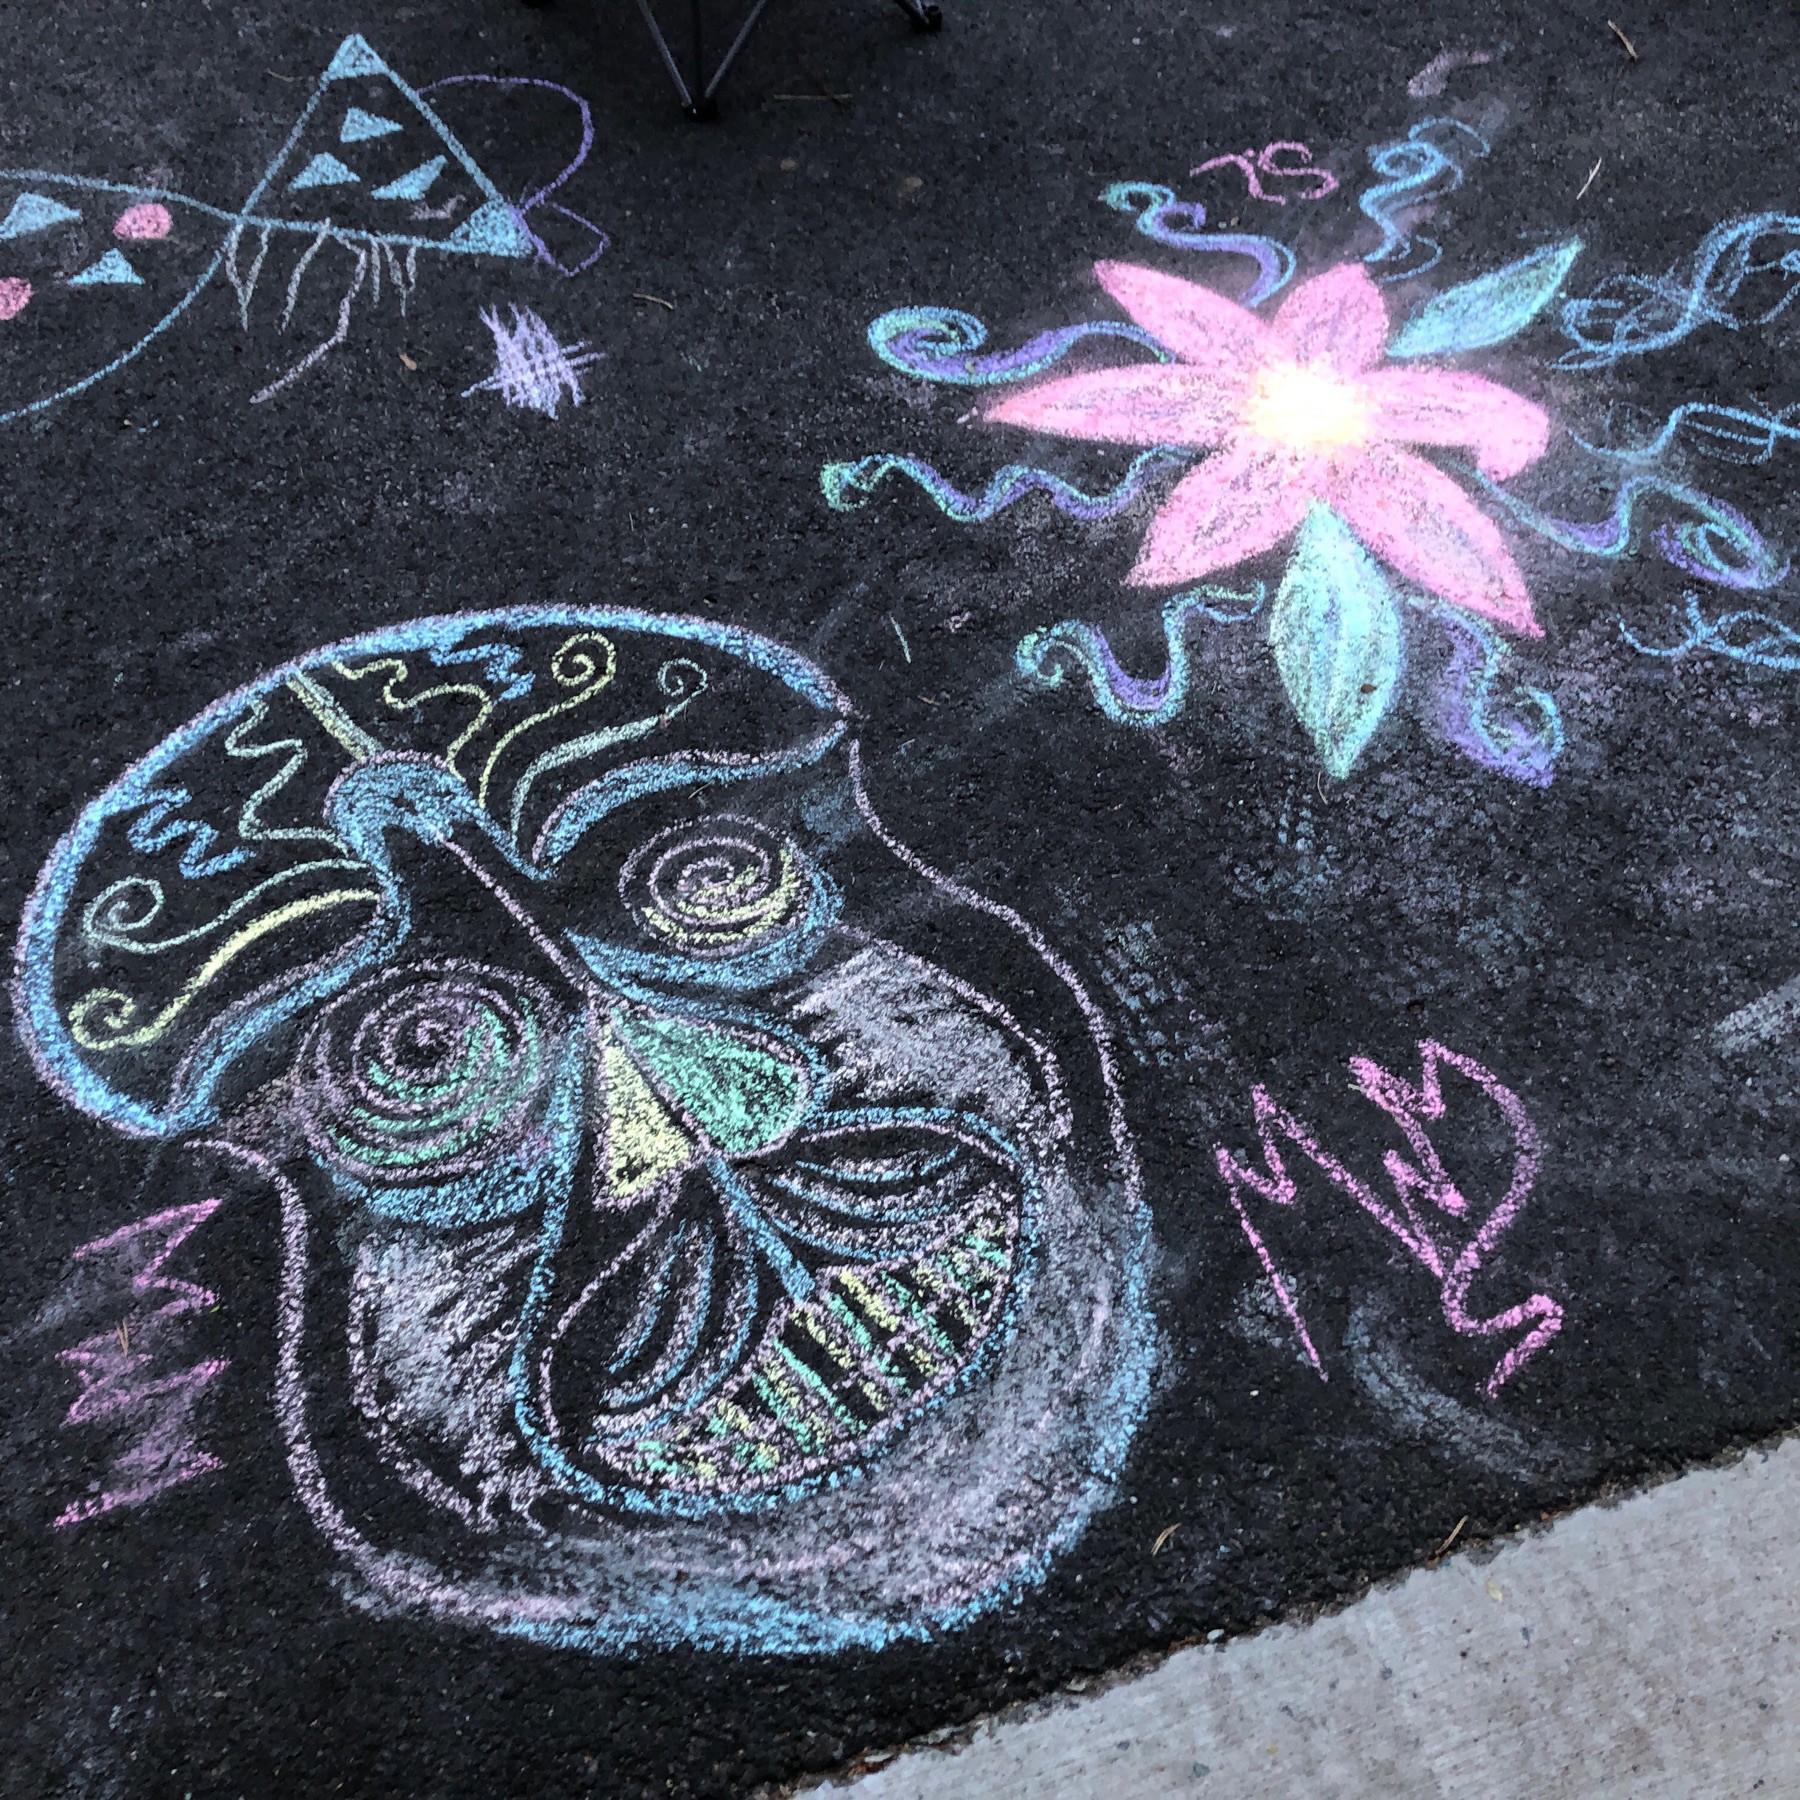 Chalk art on street.